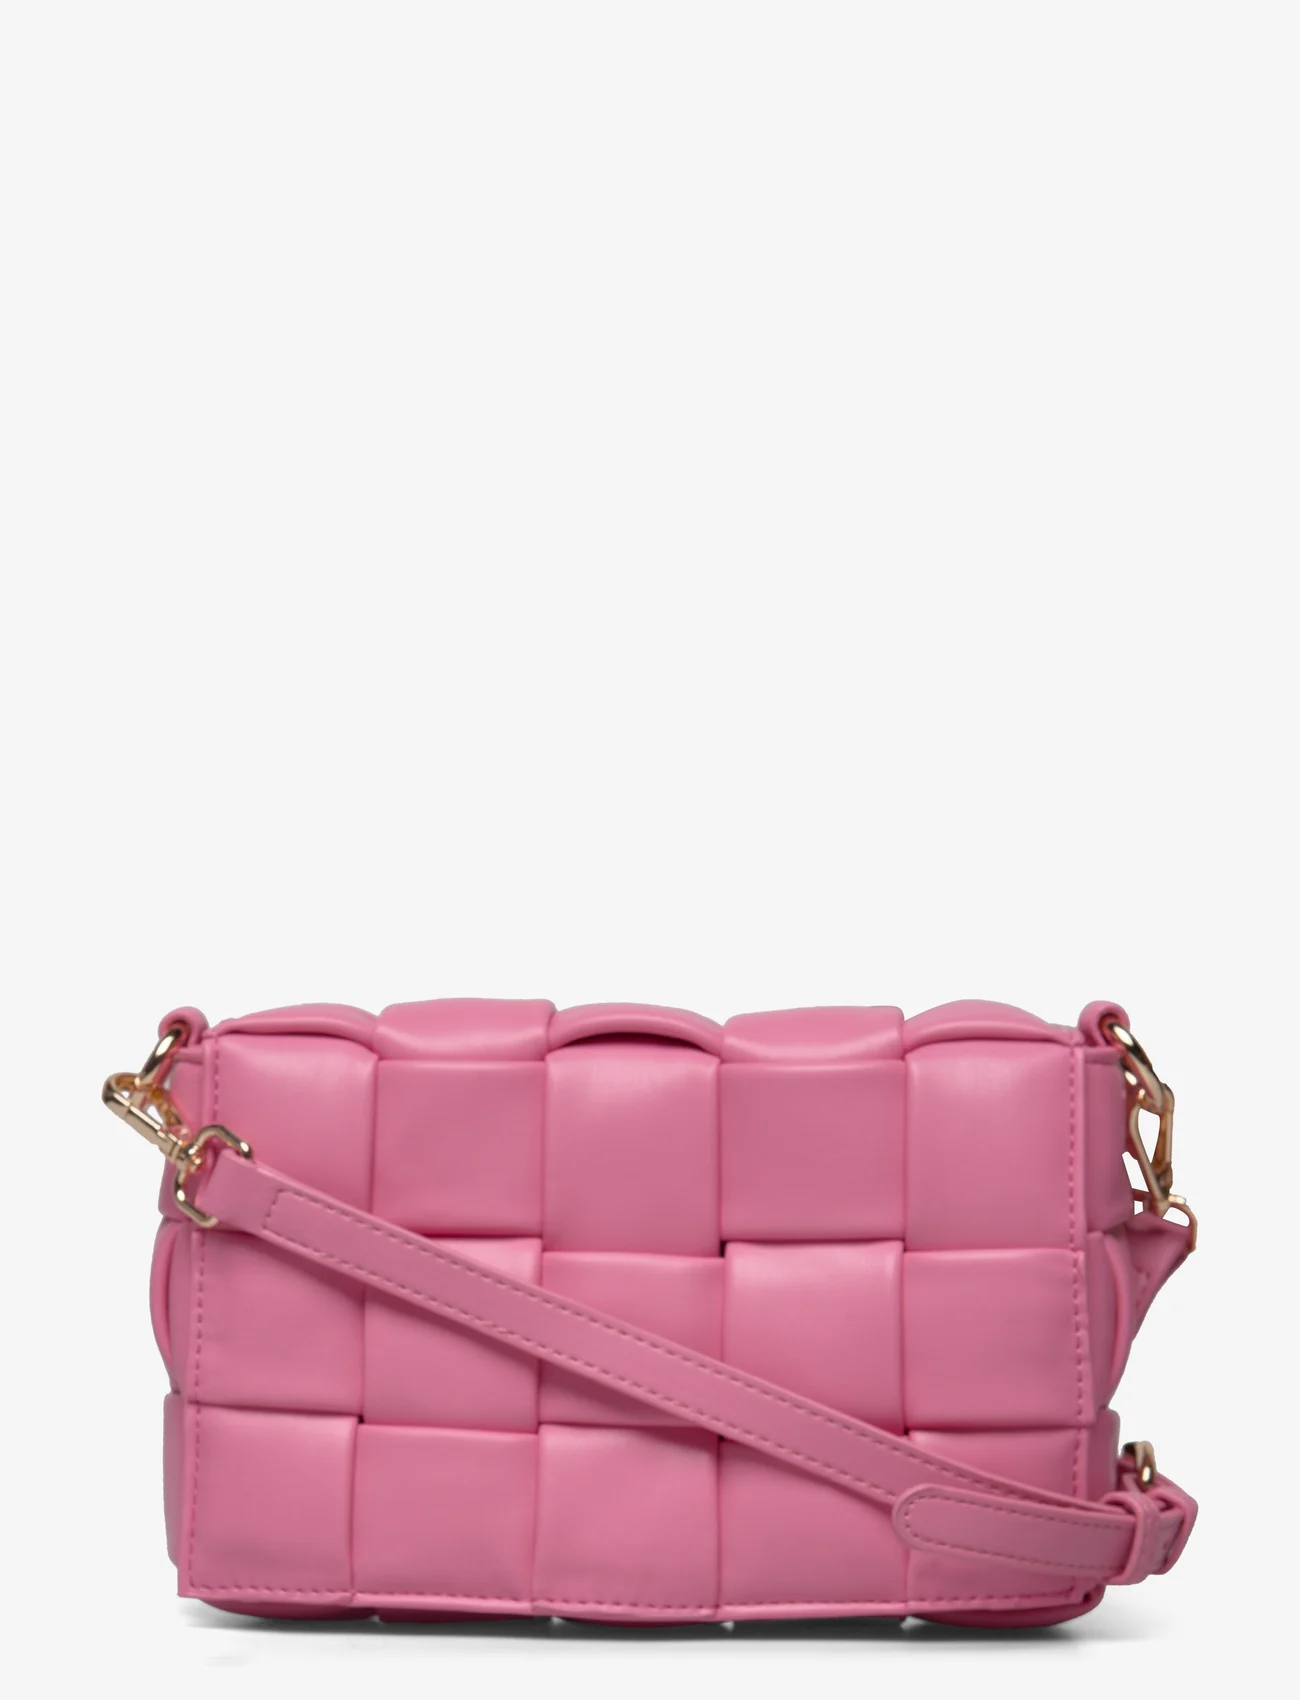 Noella - Brick Bag - verjaardagscadeaus - bubble pink - 0